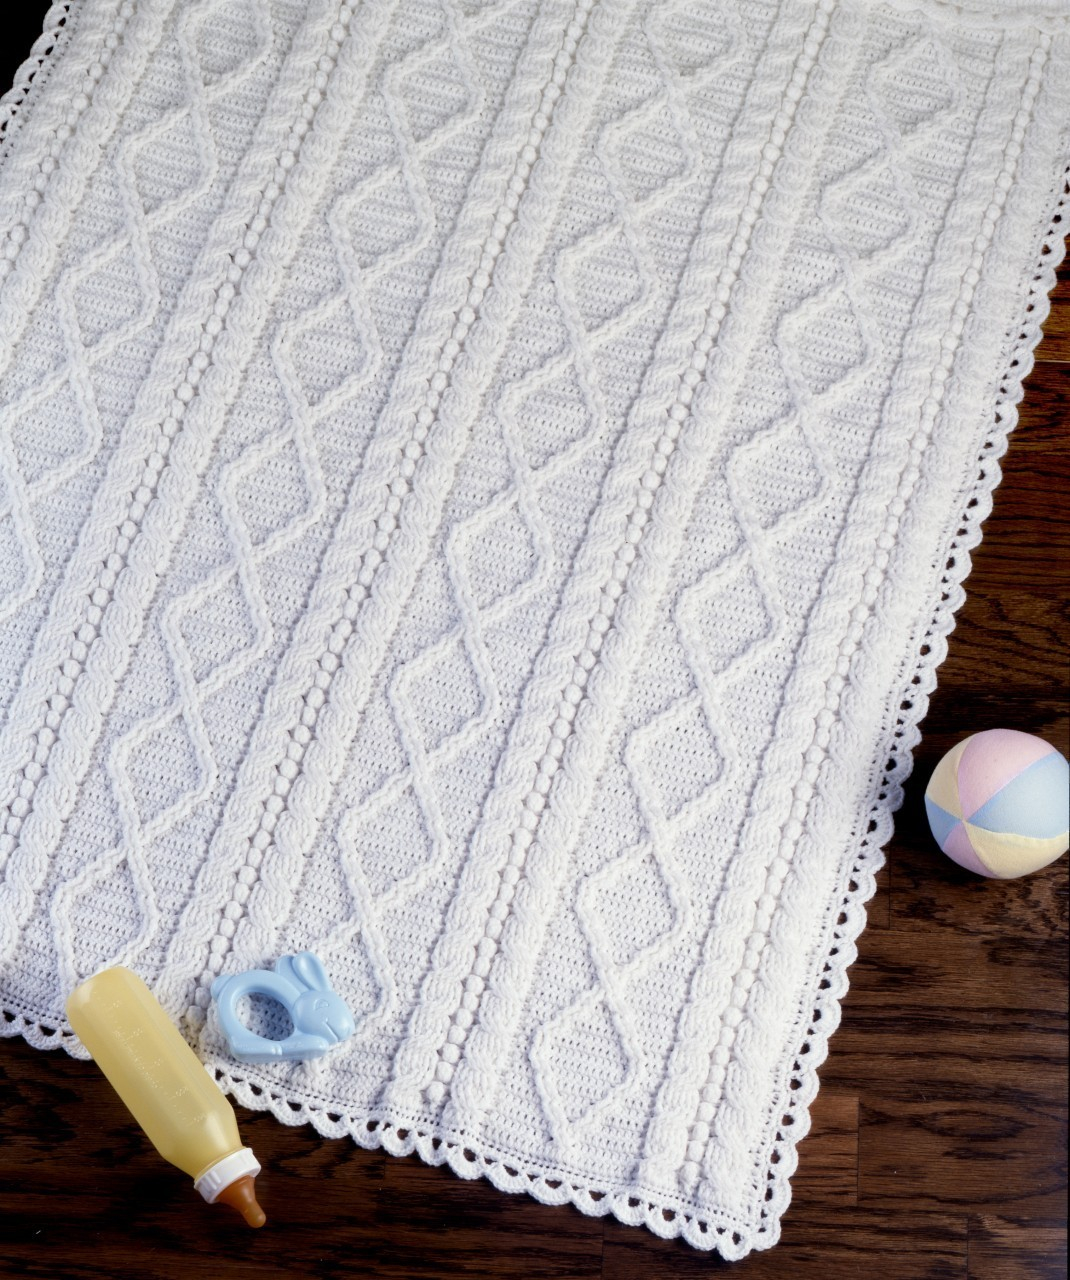 Irish Knit Baby Blanket Pattern Aran Ba Afghans To Crochet Ebook